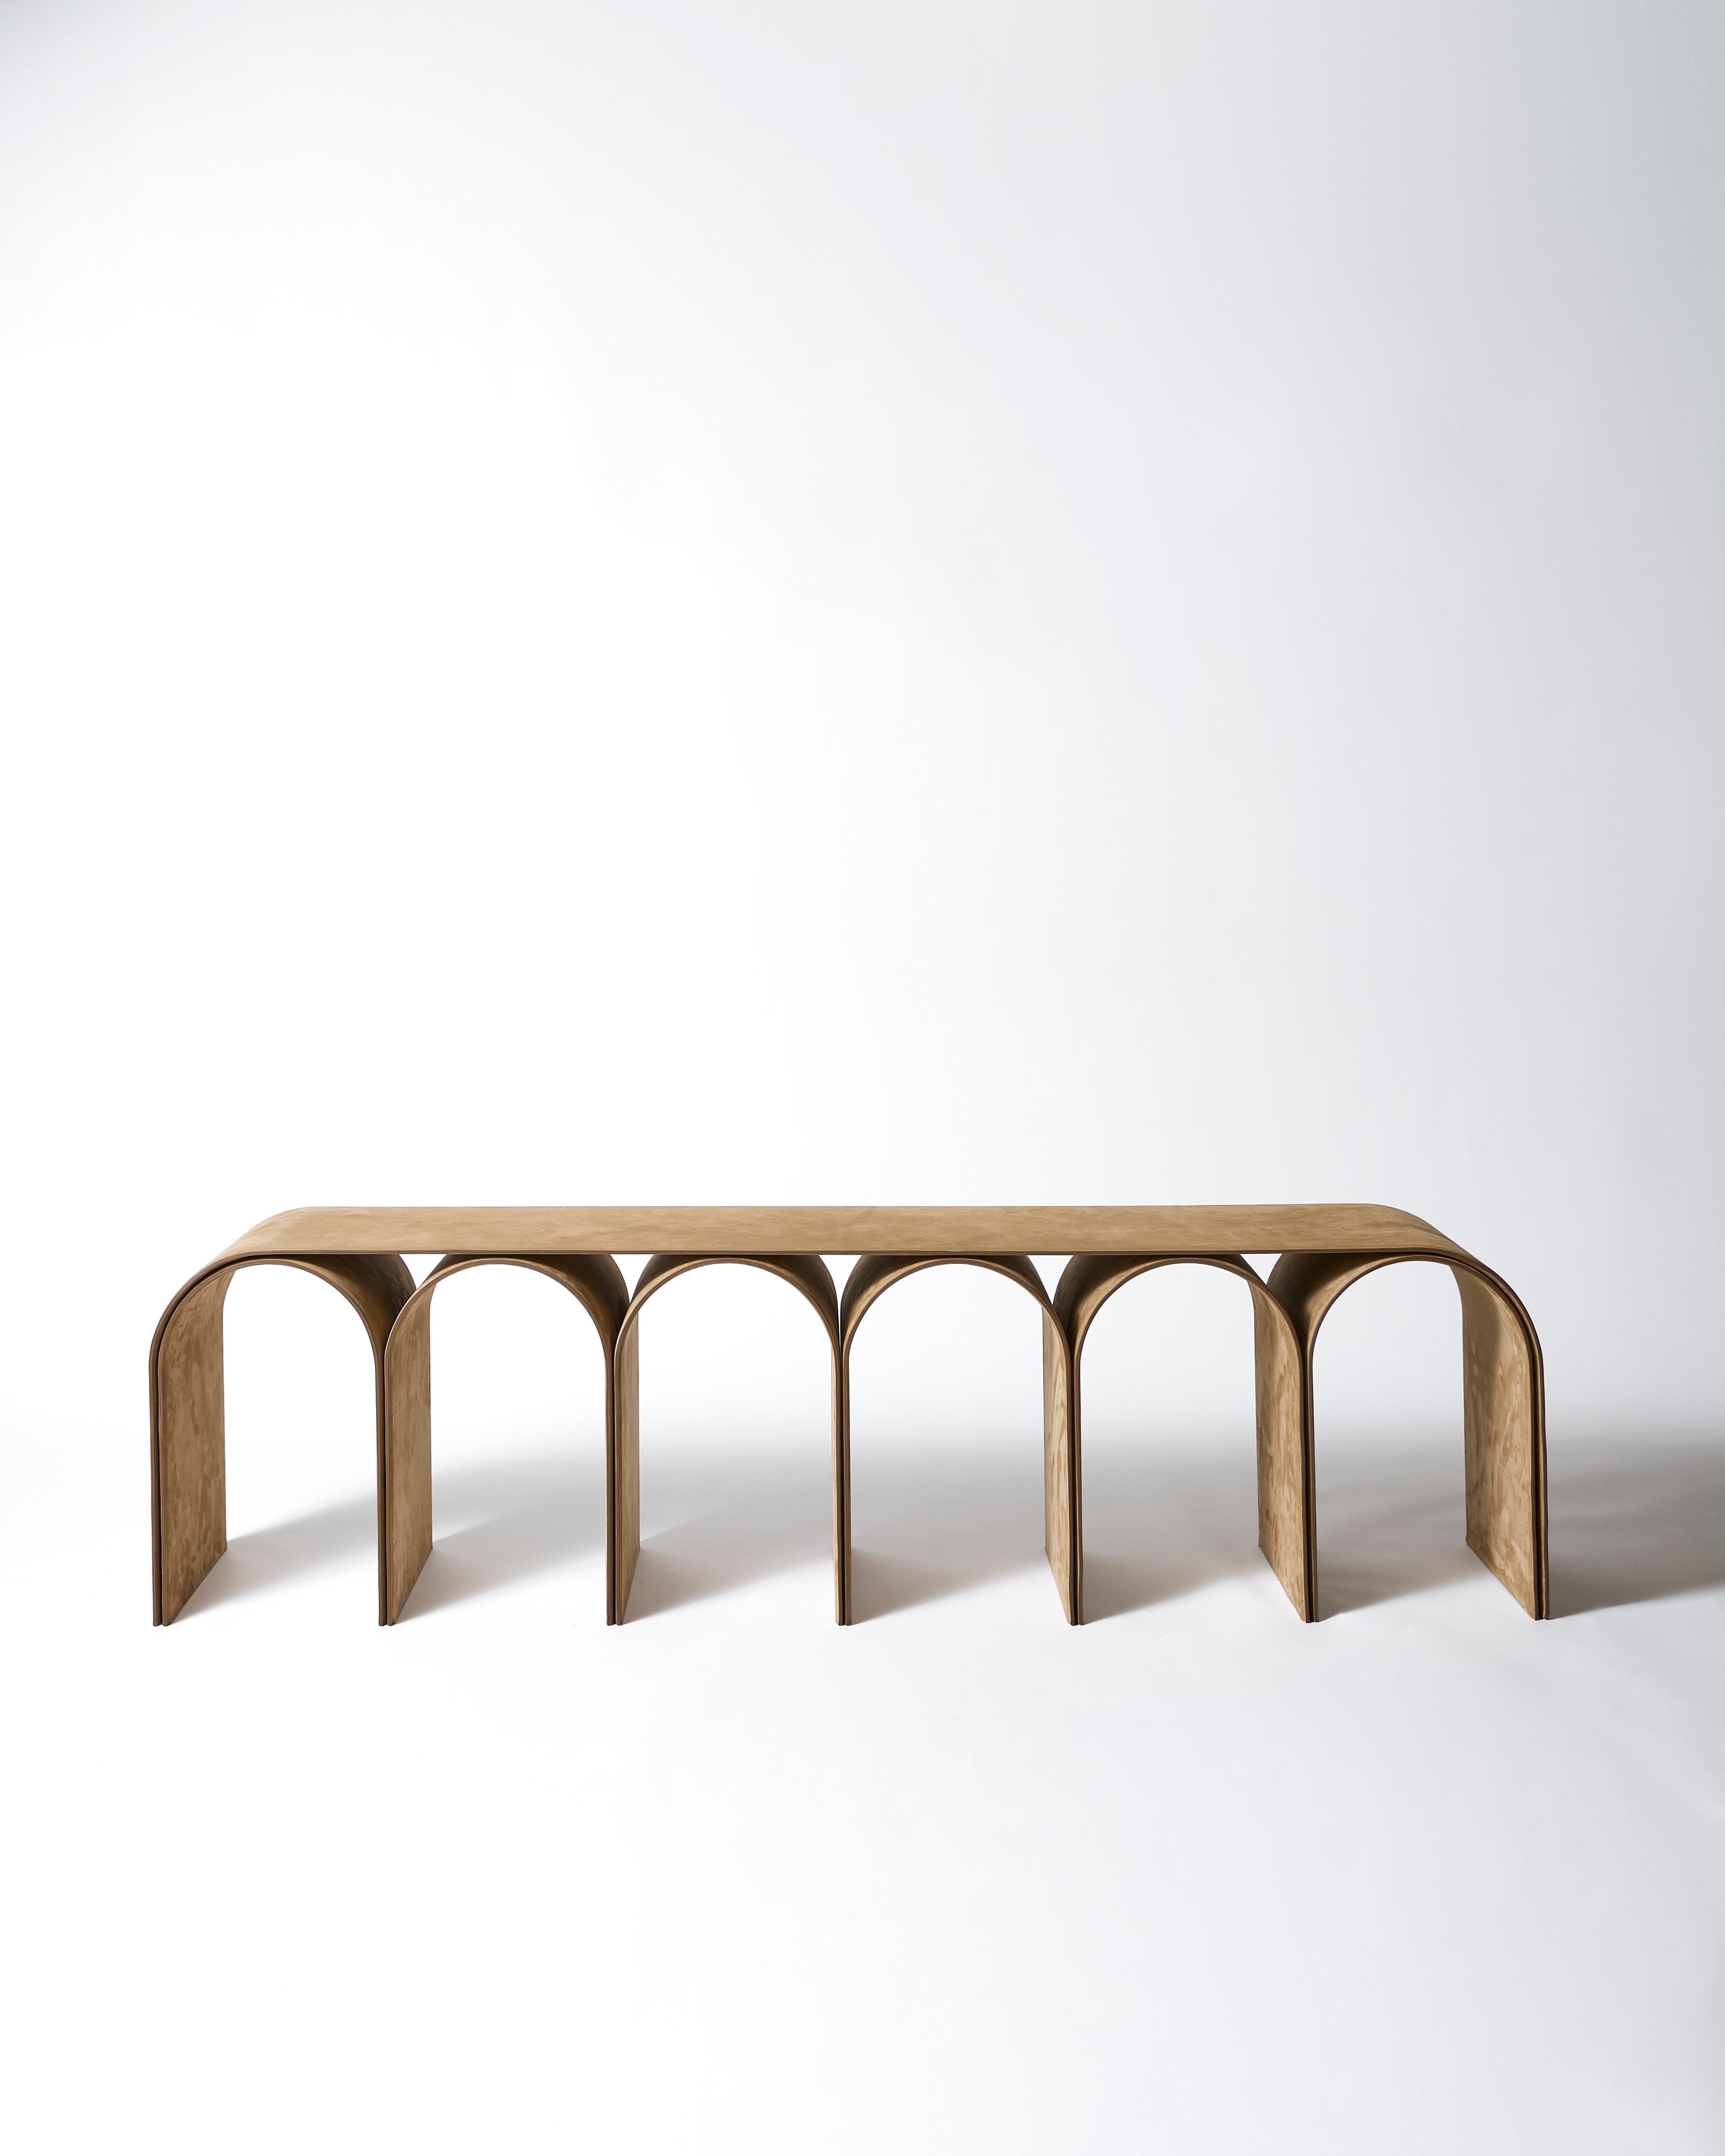 Nabuk Gold Arch Bench by Pietro Franceschini
Materials: Nabuk.
Dimensions: W 155 x L 33 x 43cm.
Manufacturer: Prinzivalli.

Available finishes:
Steel (black, white, brass finish)
Aluminum (silver finish)
Brass (satin, semi-polished,